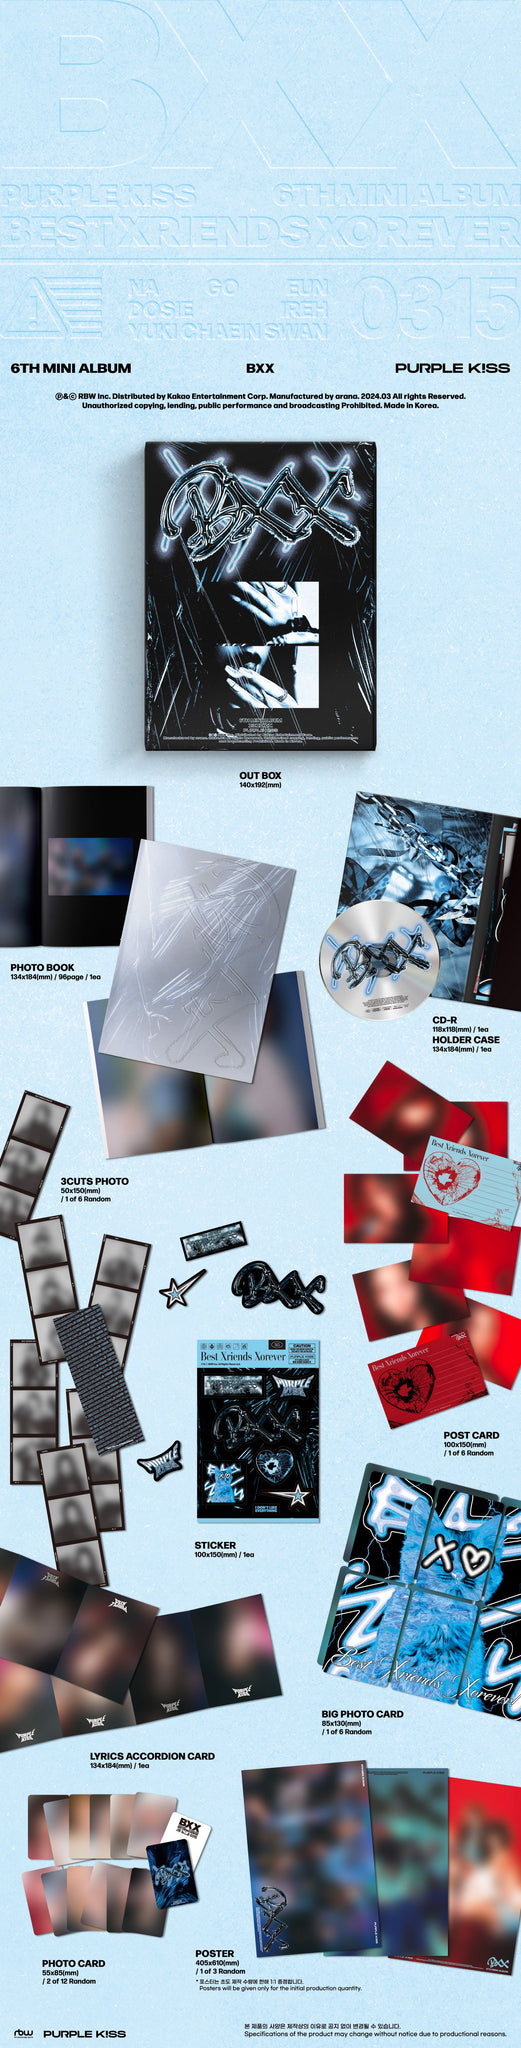 PURPLE KISS 6th Mini Album BXX Inclusions Out Box, Photobook, CD, Holder Case, 3Cuts Photo, Postcard, Sticker, Lyrics Accordion Card, Big Photocard, Photocards, 1st Press Poster